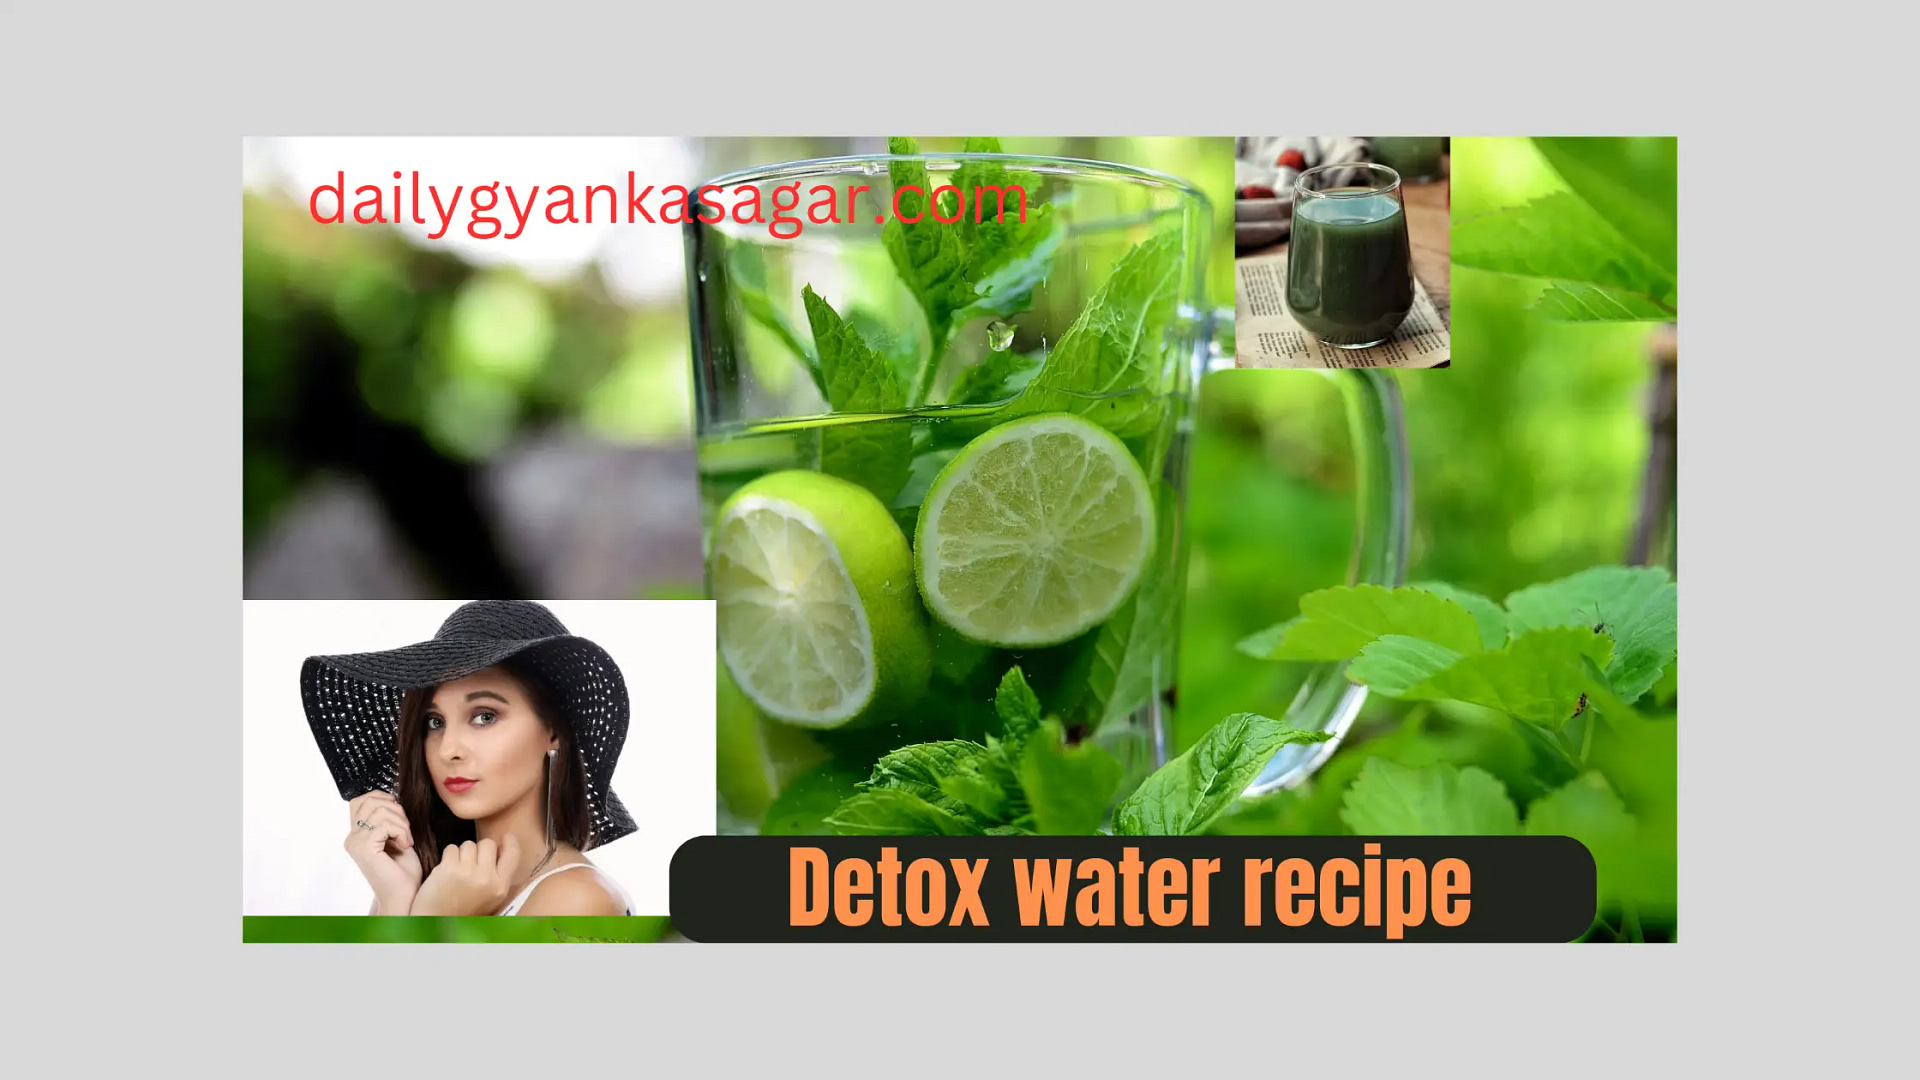 Detox water recipe